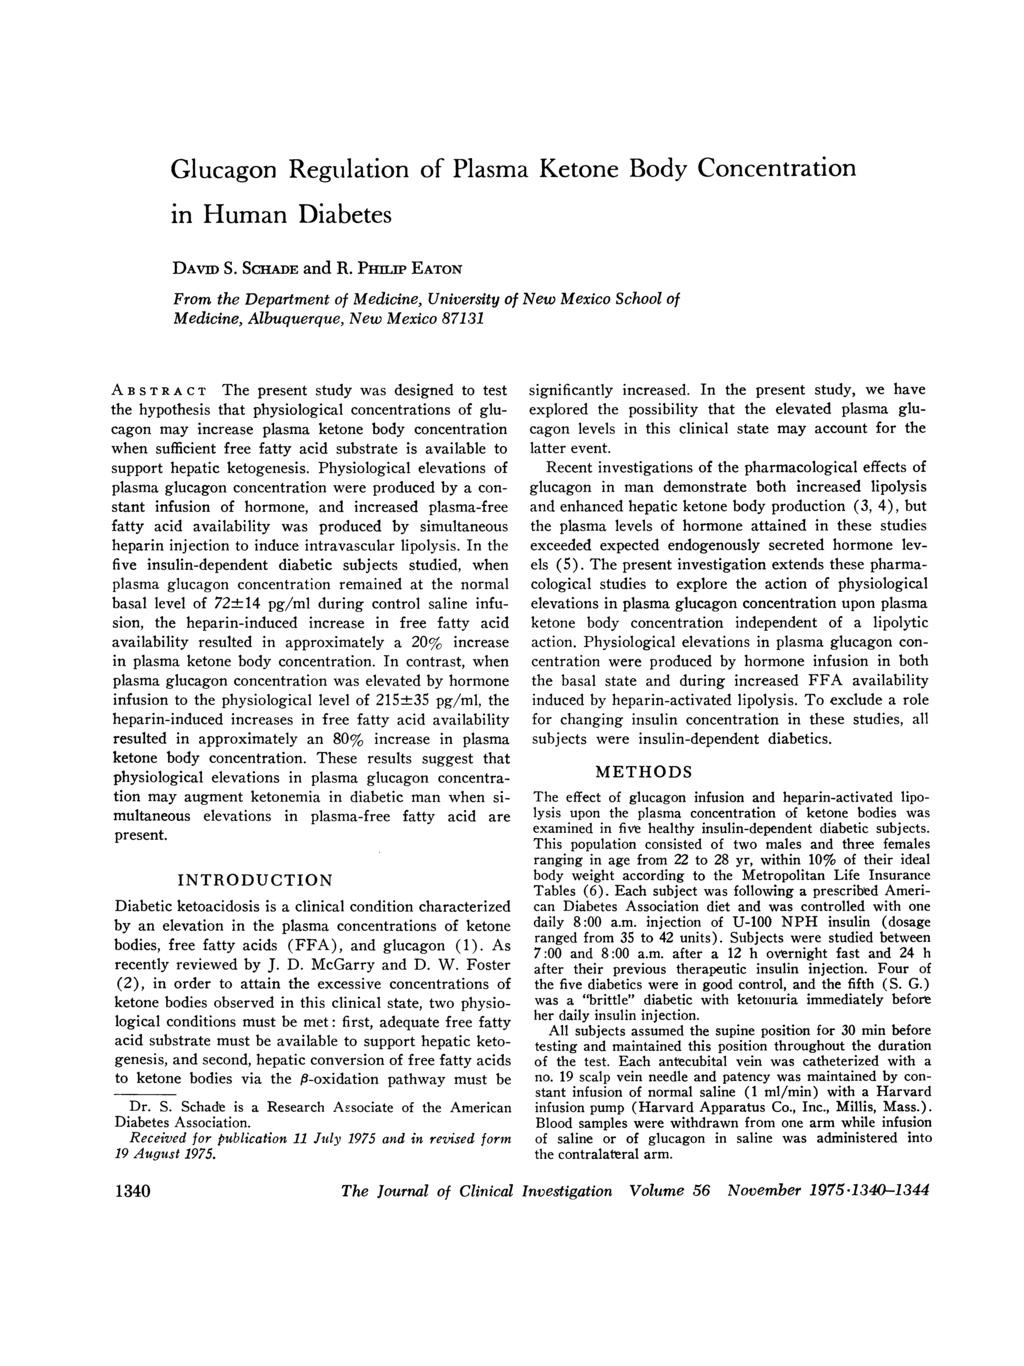 Glucagon Regulation of Plasma Ketone Body Concentration in Human Diabetes DAVID S. ScHADE and R.